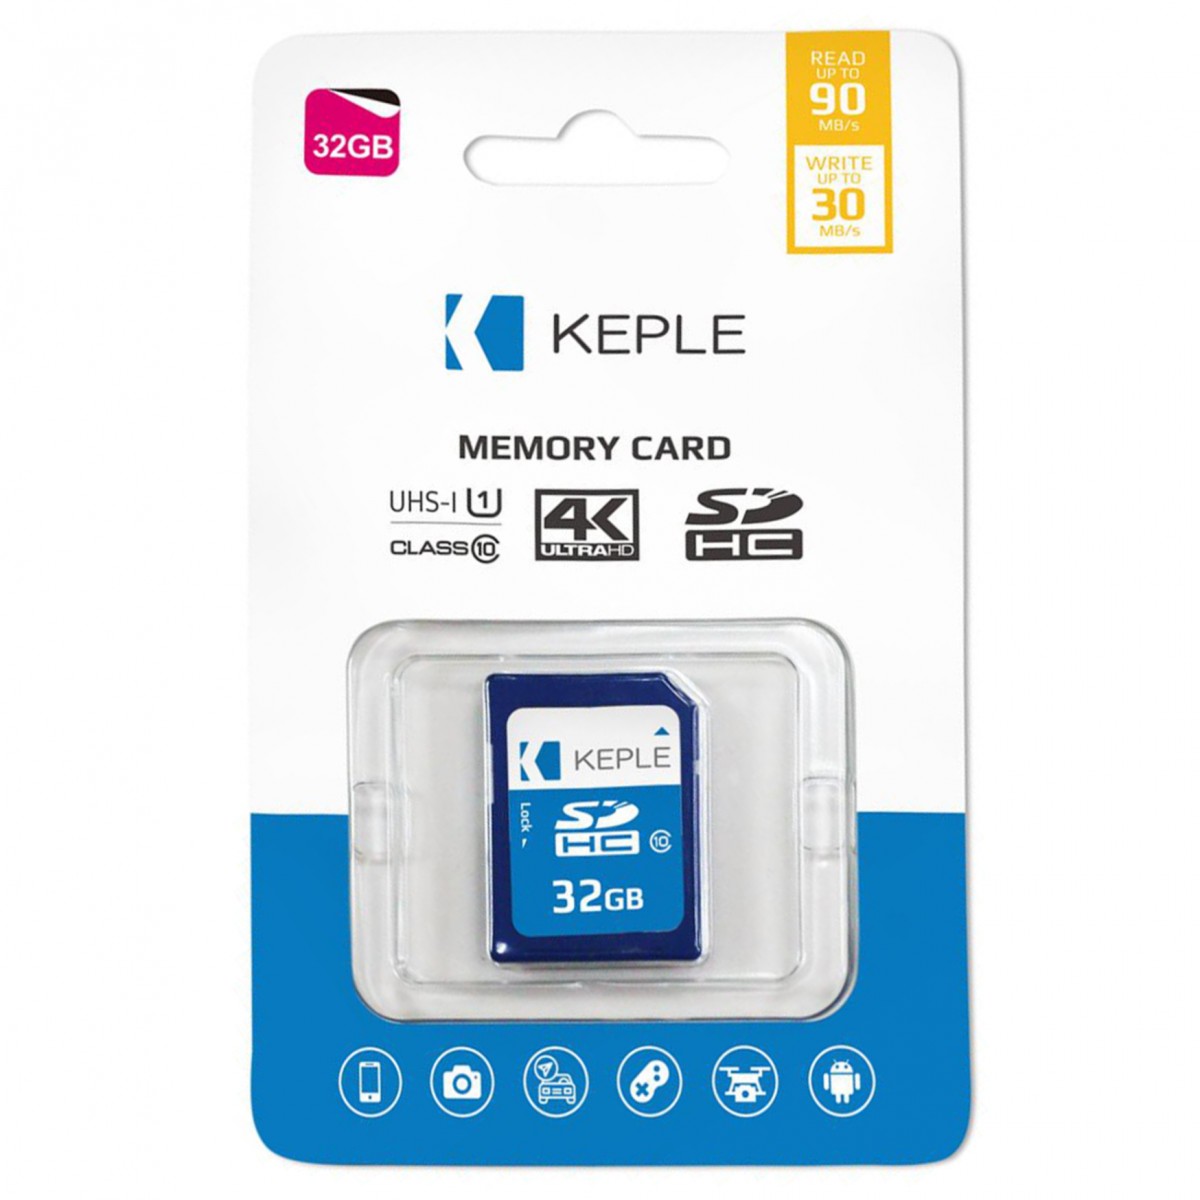 32GB Memory Card for Nikon Coolpix S6700 Digital Camera 